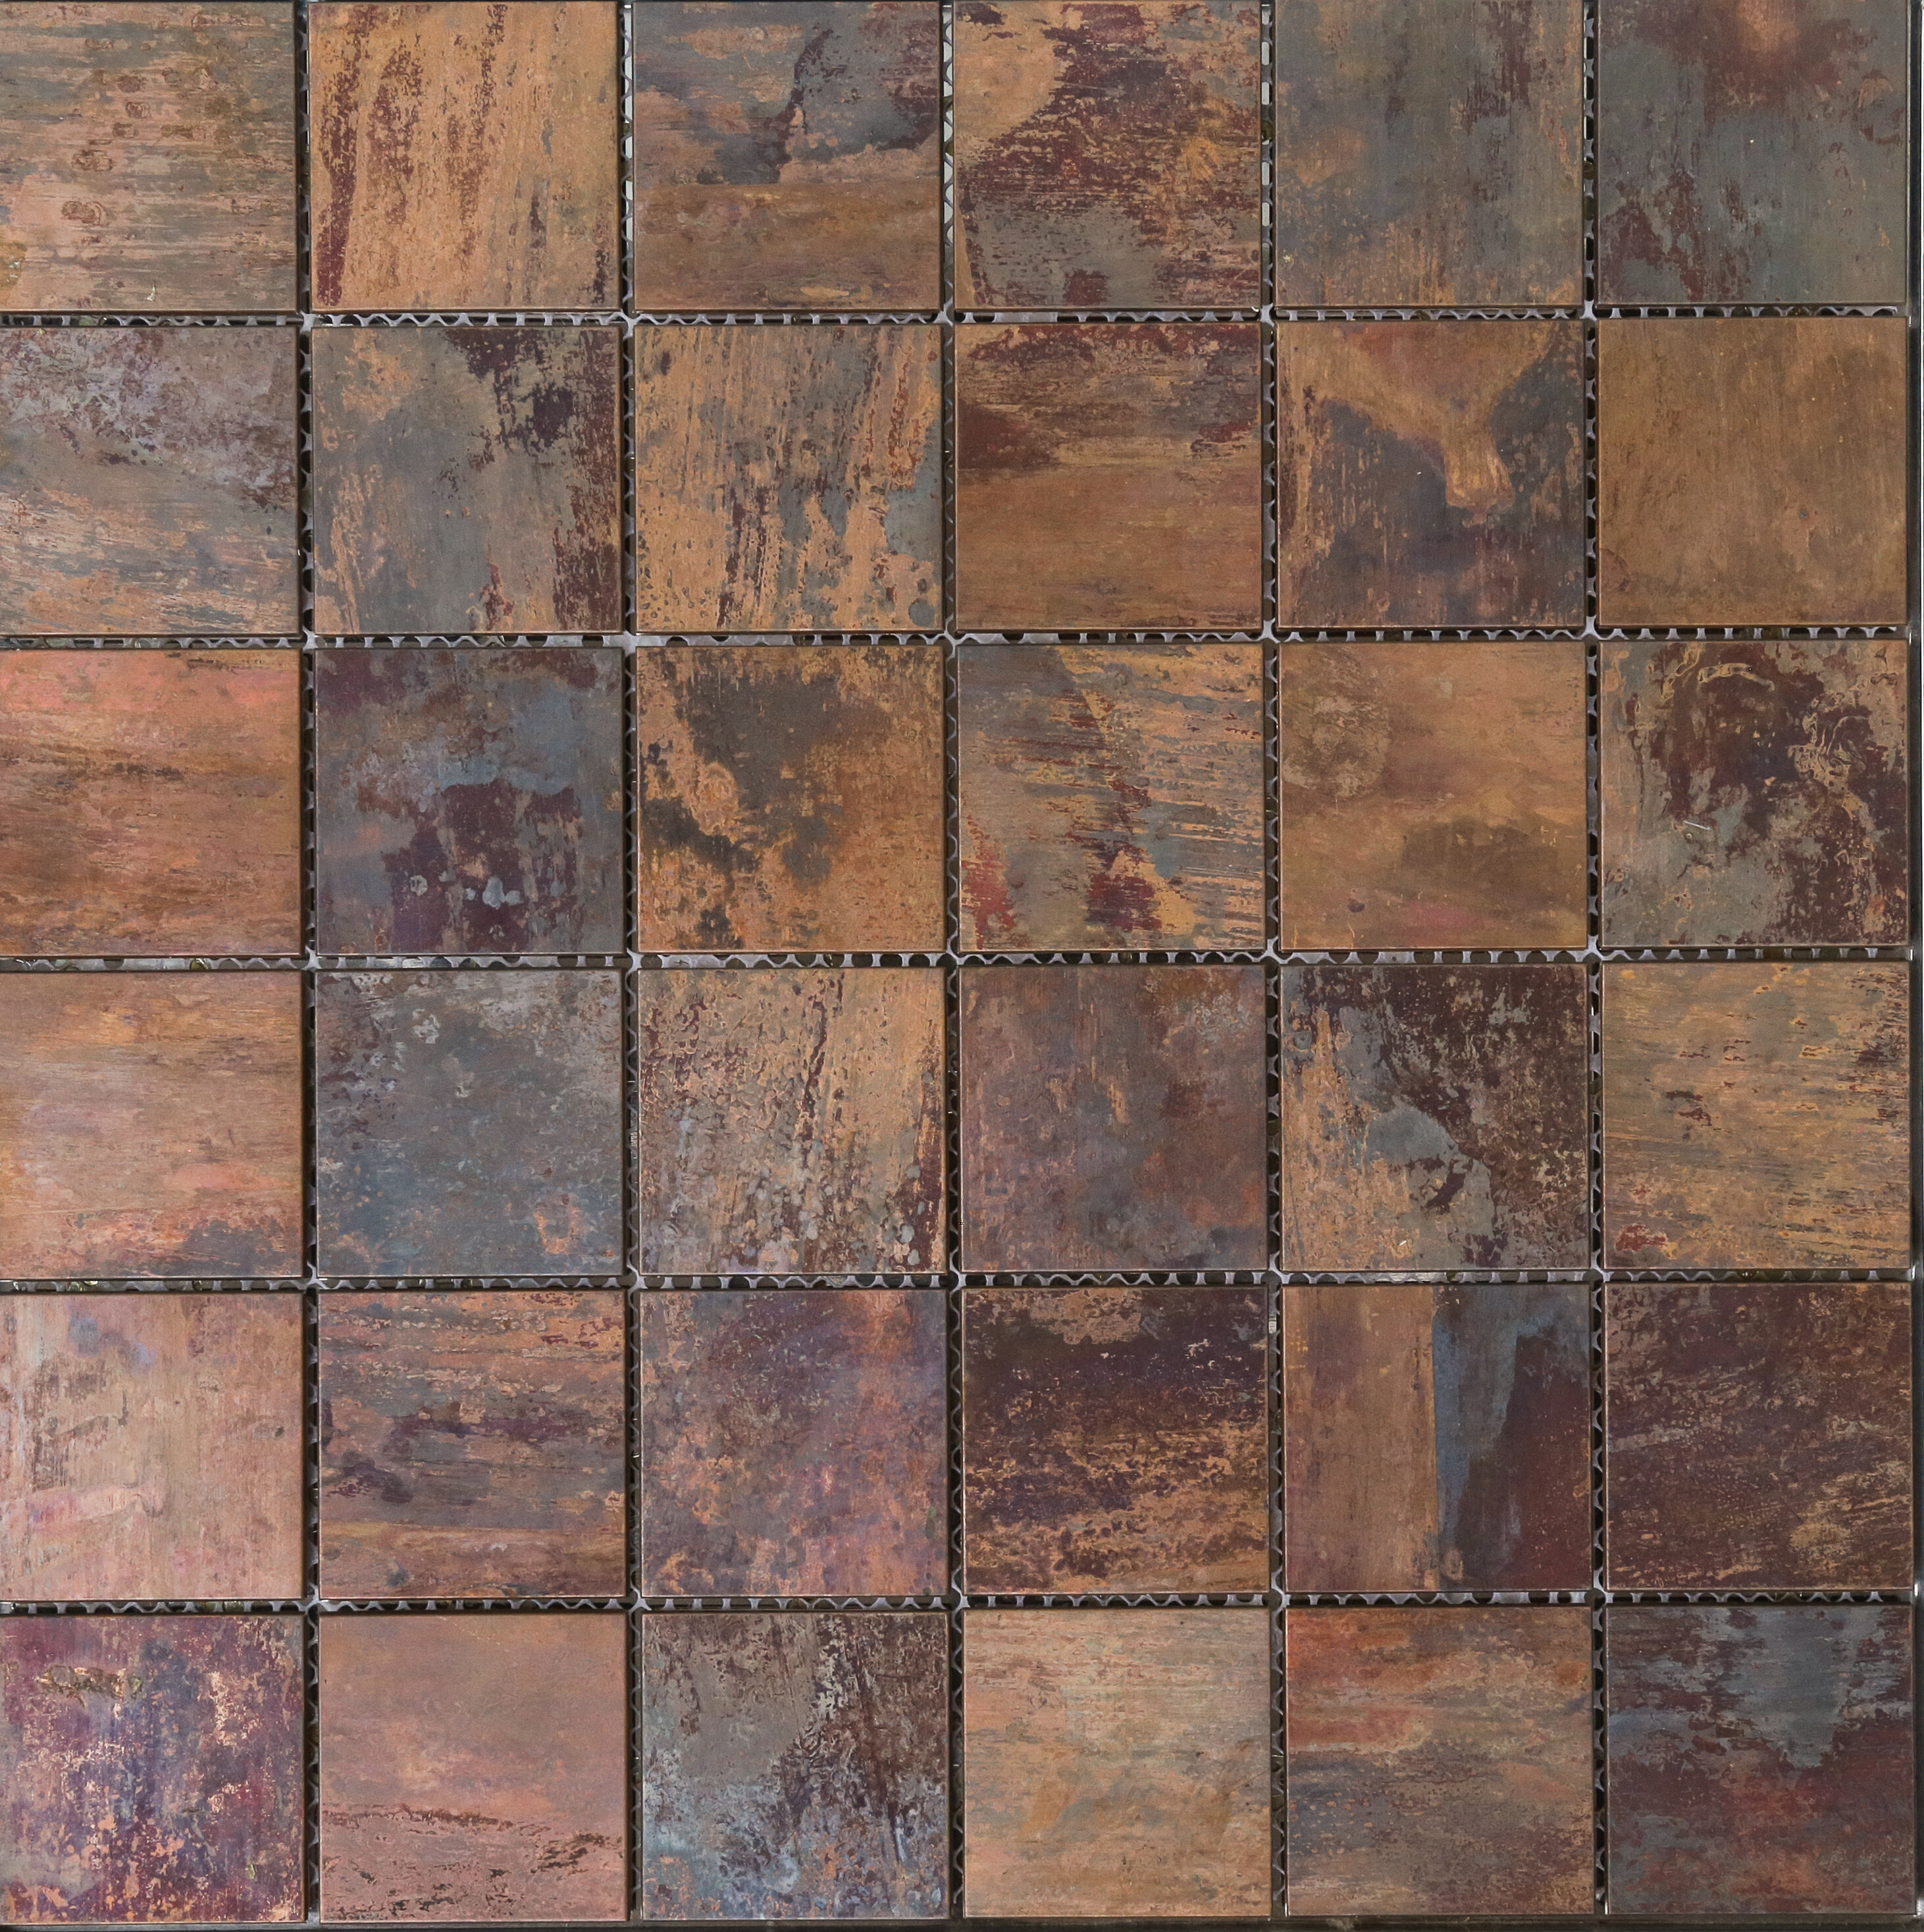 commercial floor tiles for sale, wholesale commercial floor tile